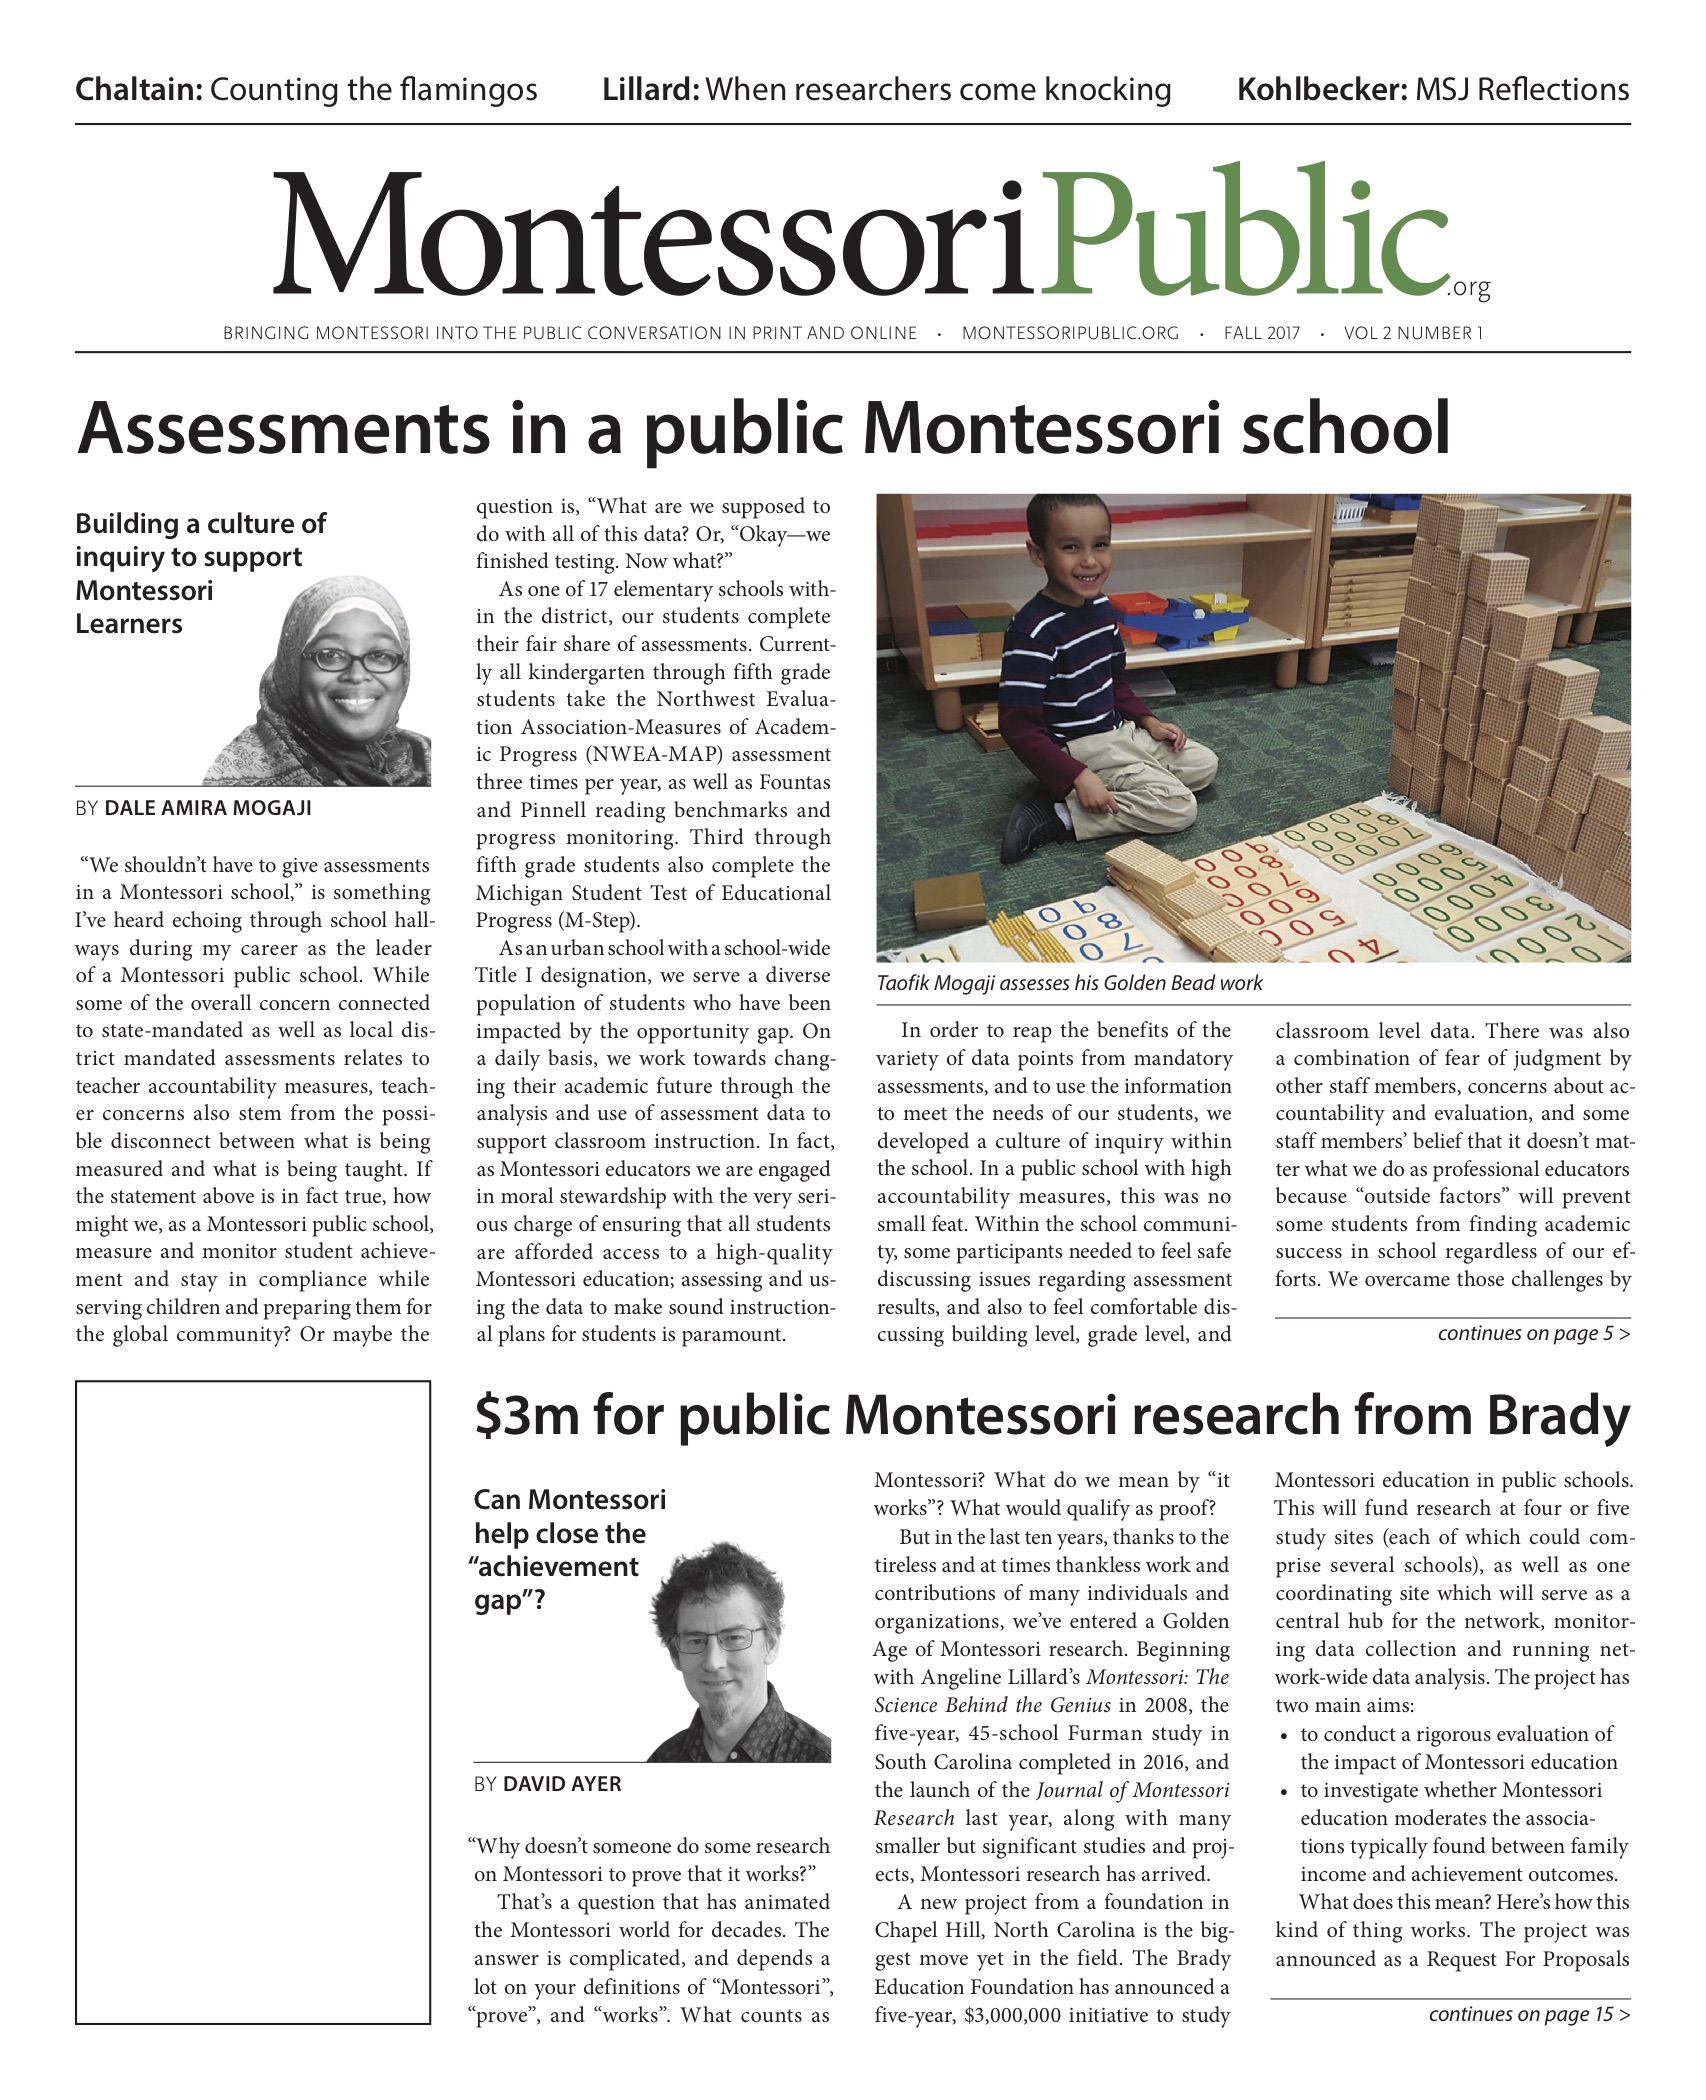 MontessoriPublic—Print Edition Volume 2 #1